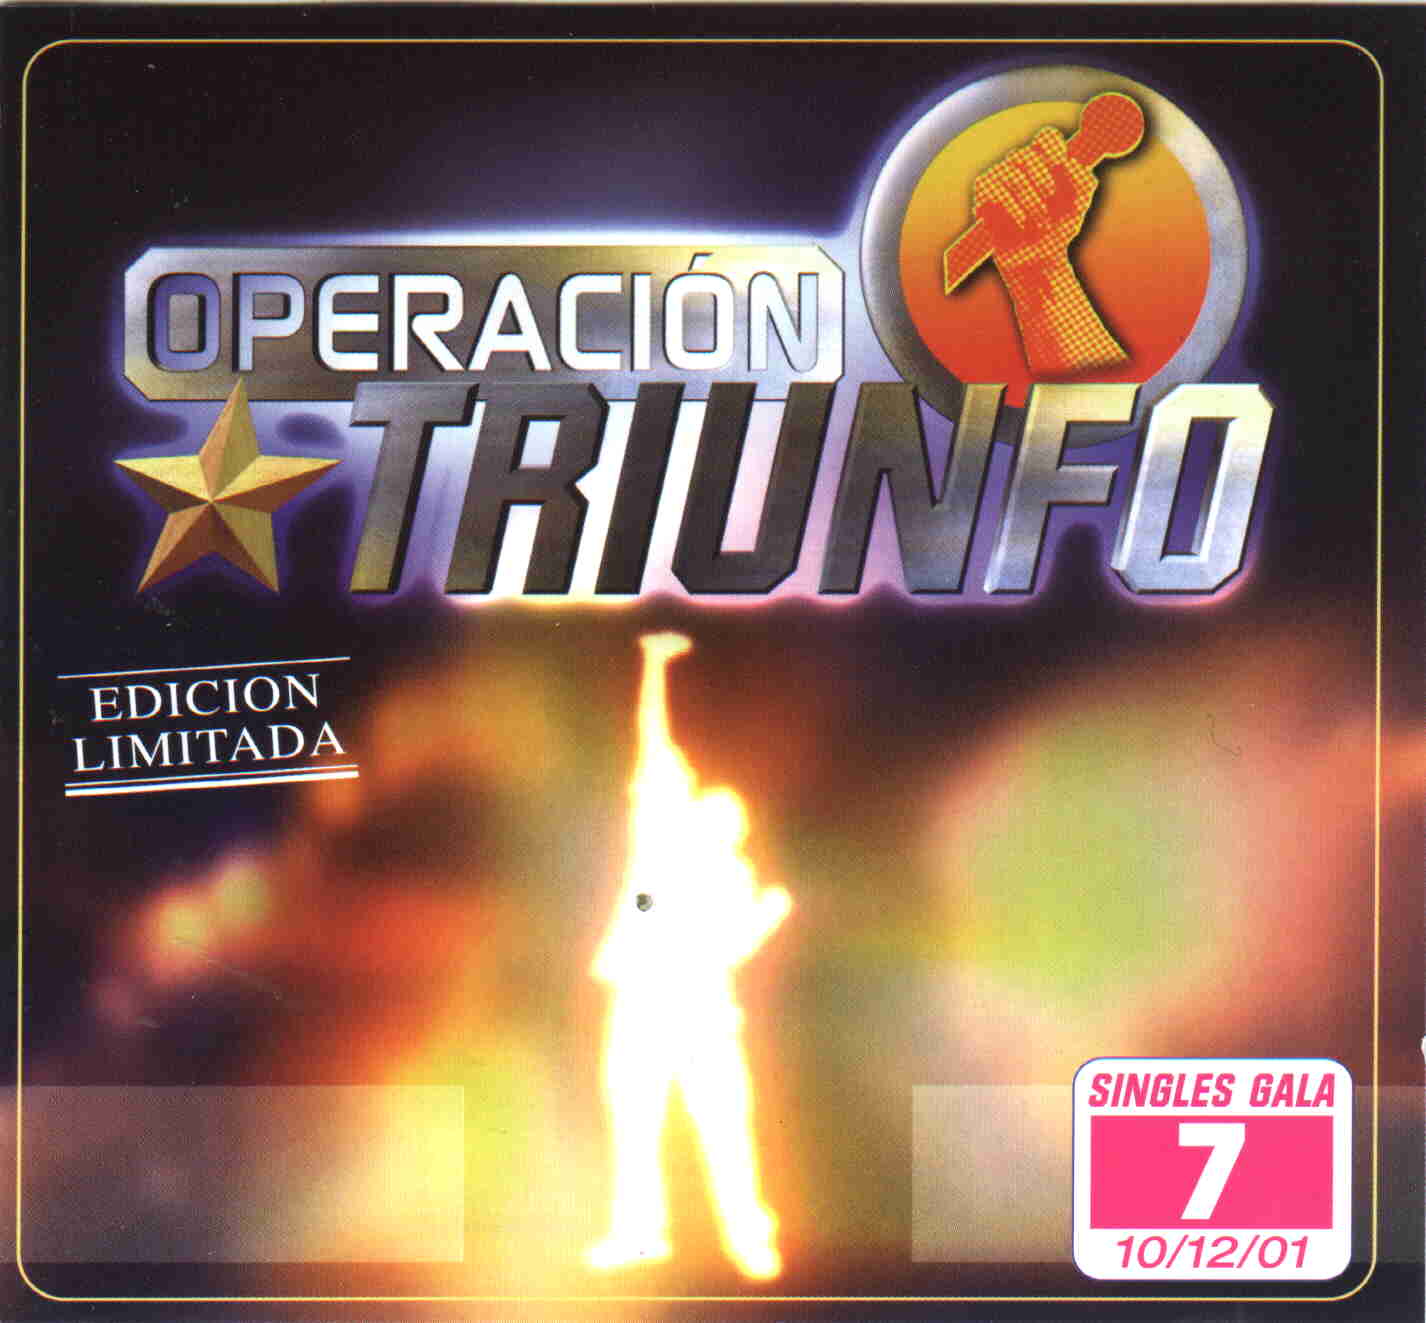 Cartula Frontal de Operacion Triunfo 2001-2002 Gala 7